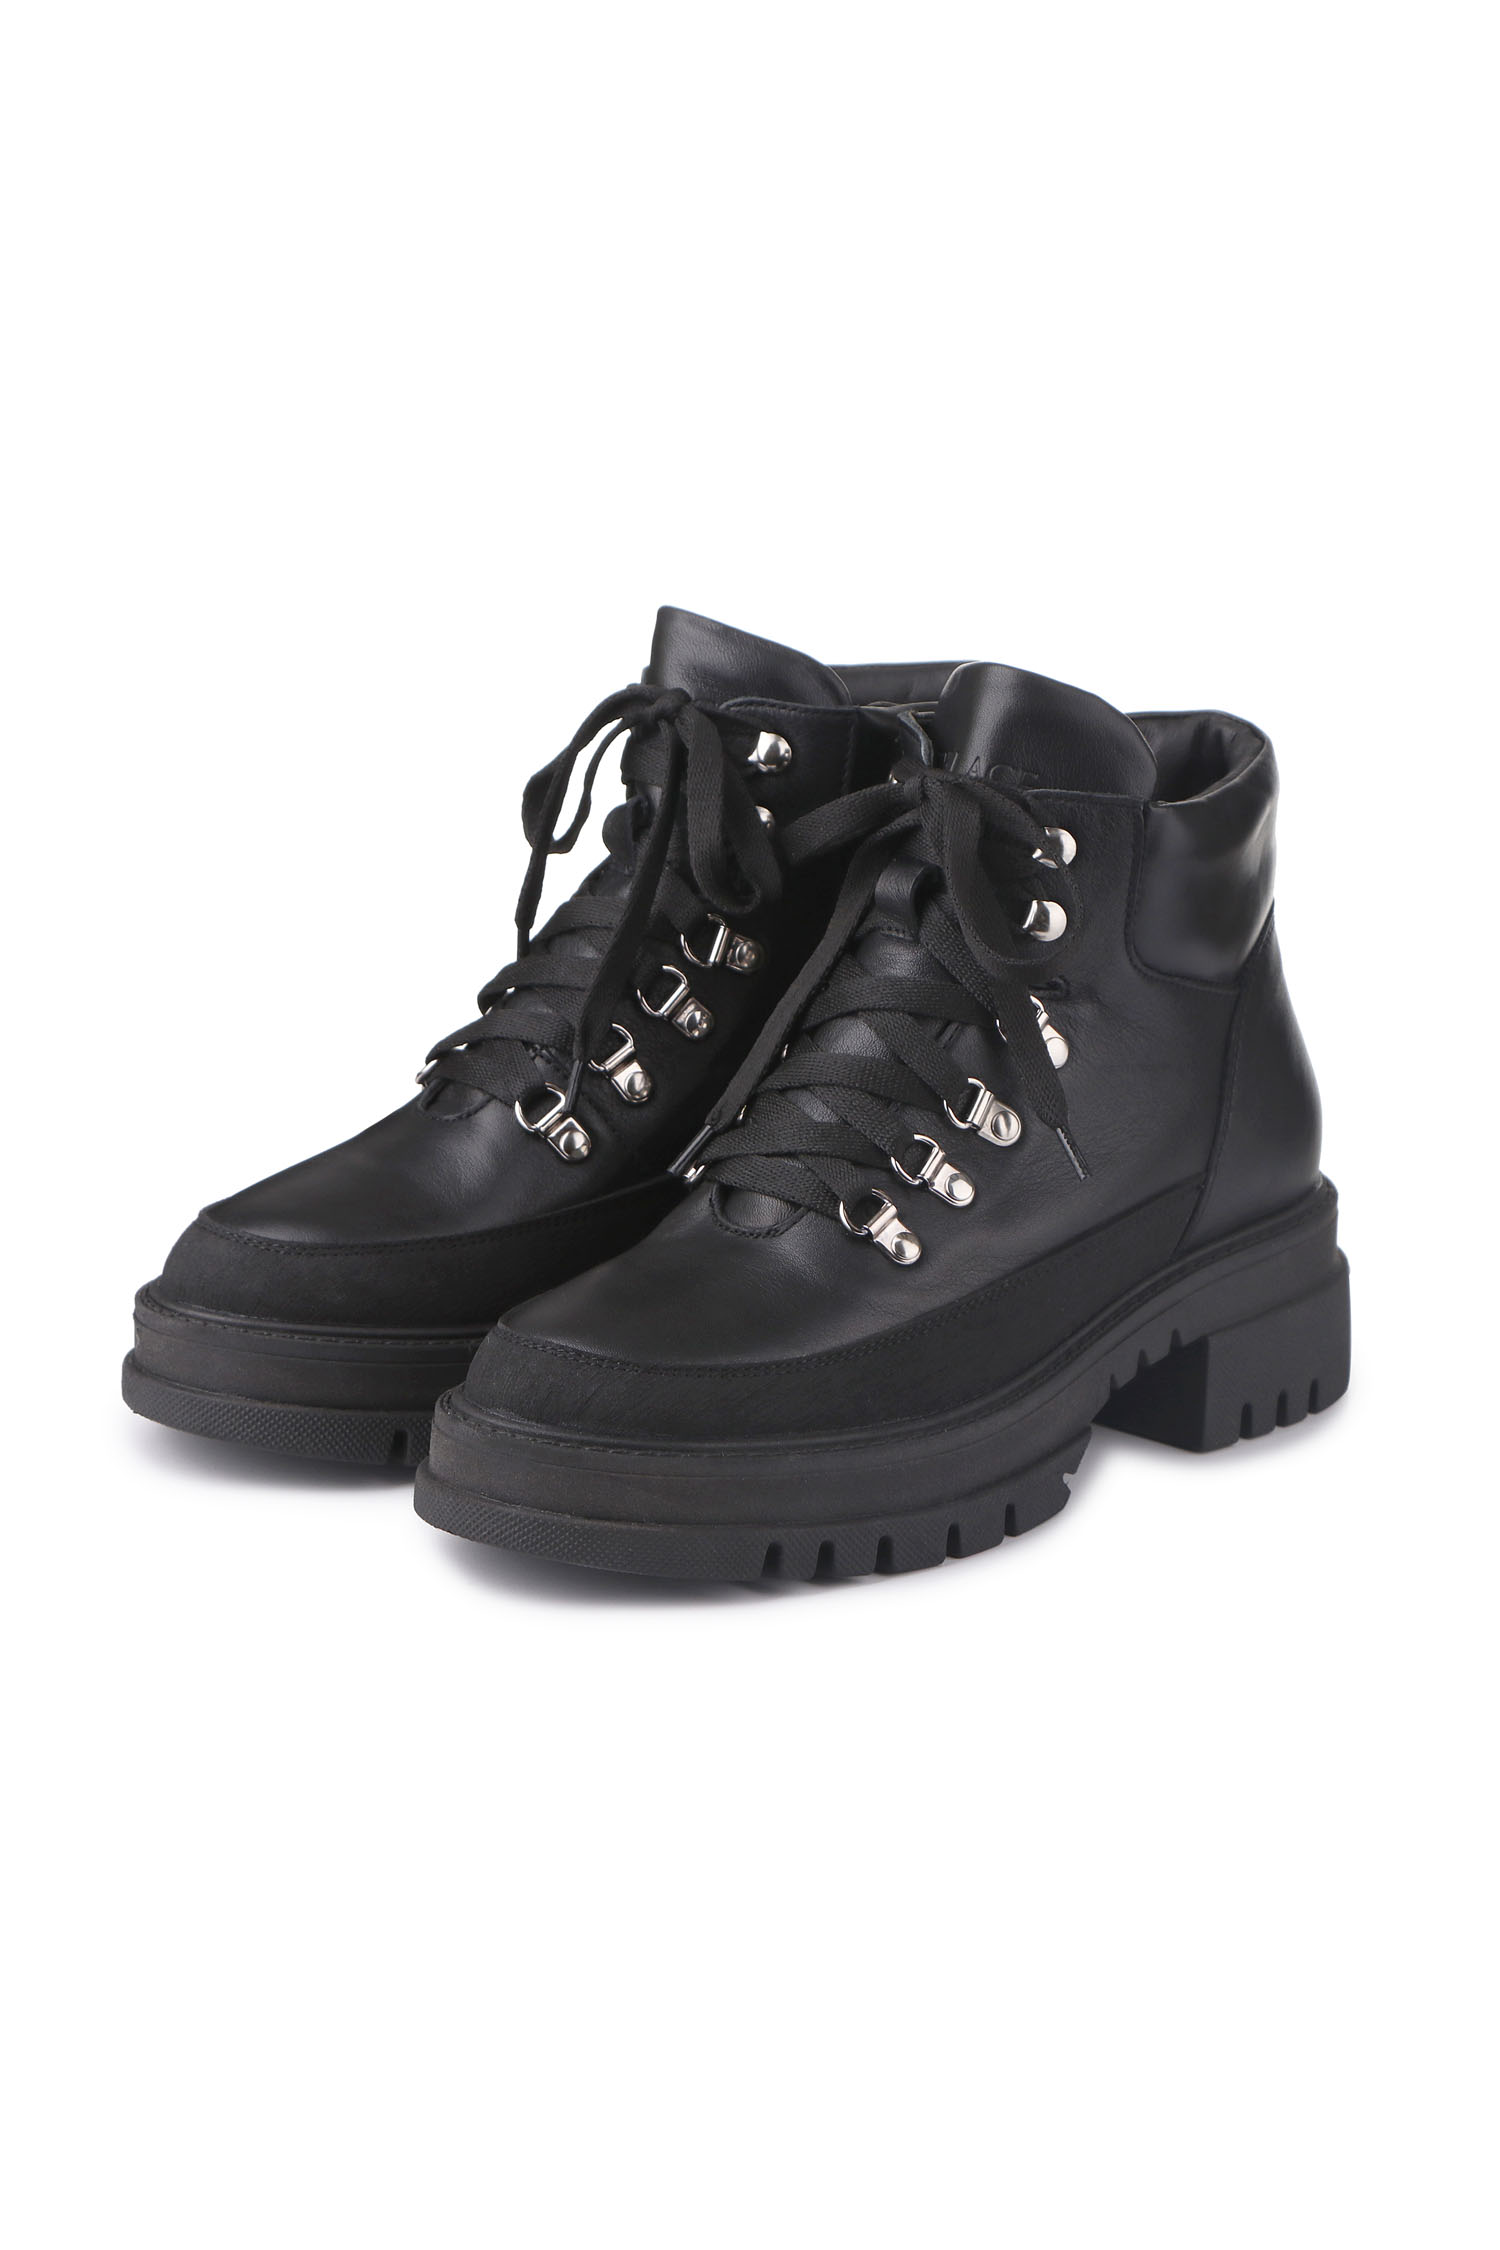 Зимові черевики Hiking boots чорні - THE LACE photo 123282